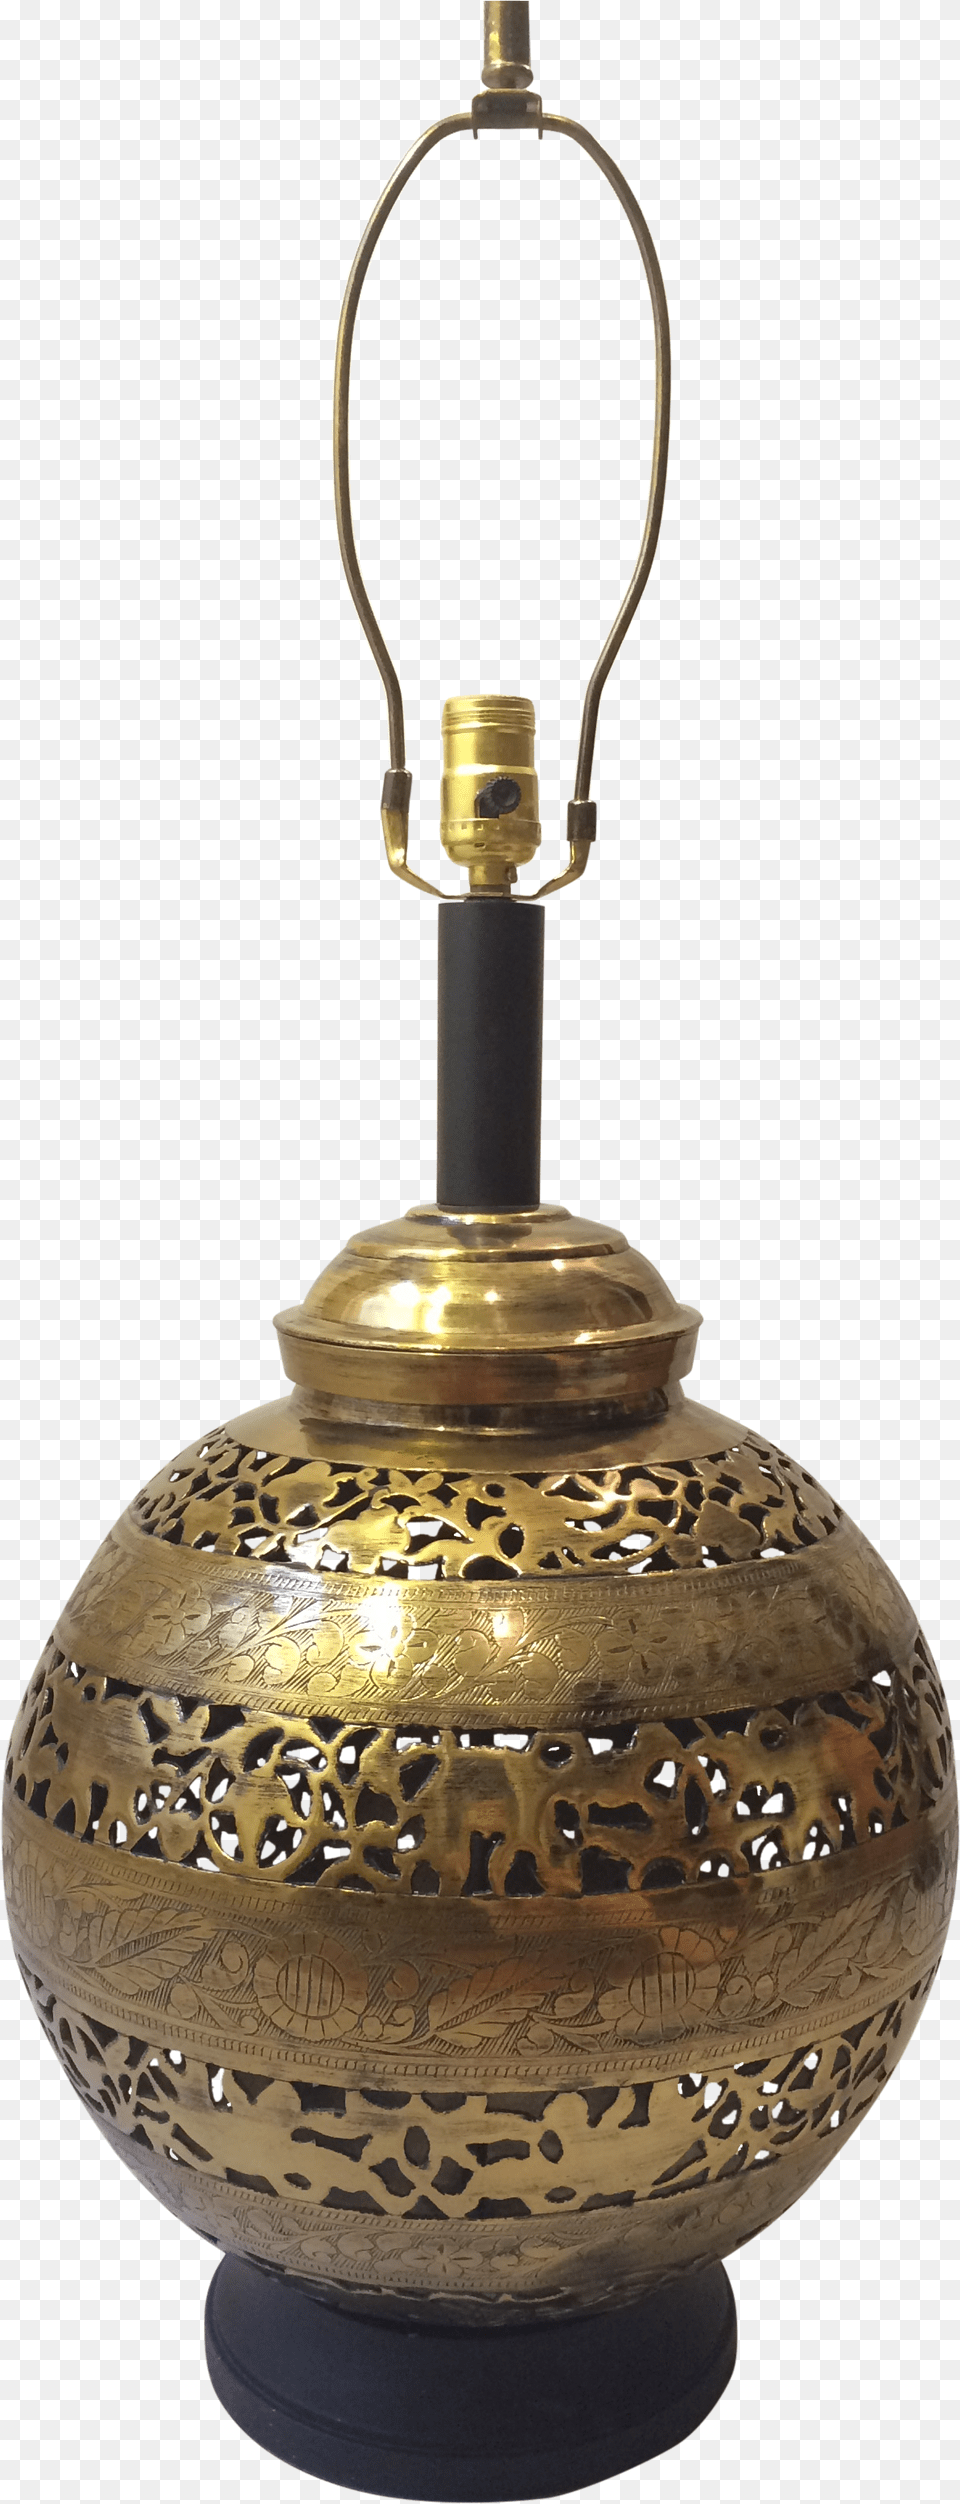 Large Pierced Brass Globe Shaped Lamp On Chairish Brass, Lantern, Bronze, Smoke Pipe Free Png Download